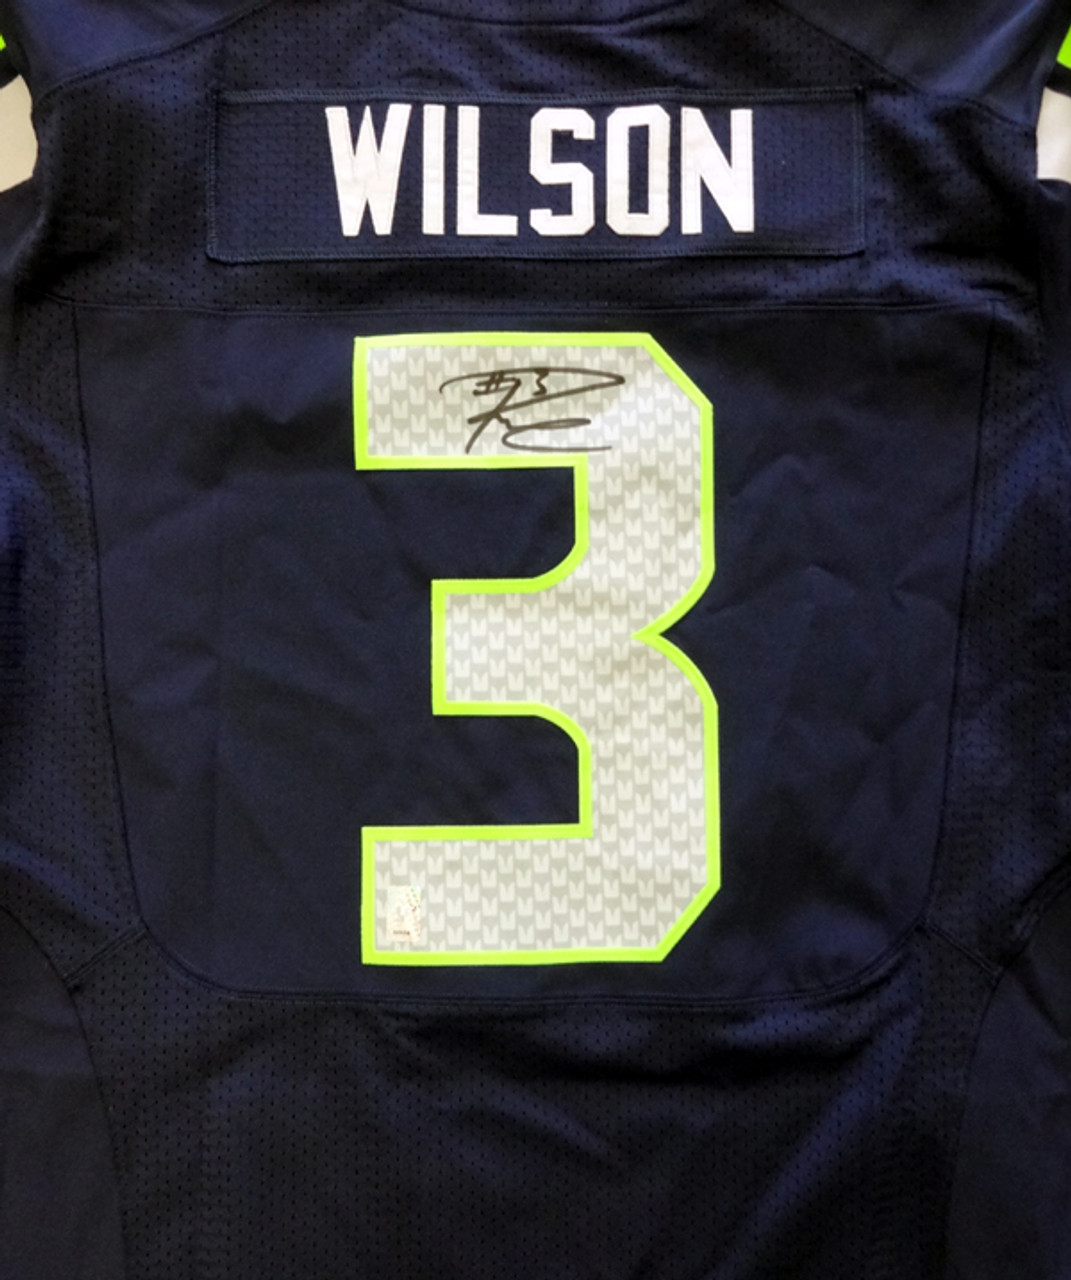 russell wilson framed jersey